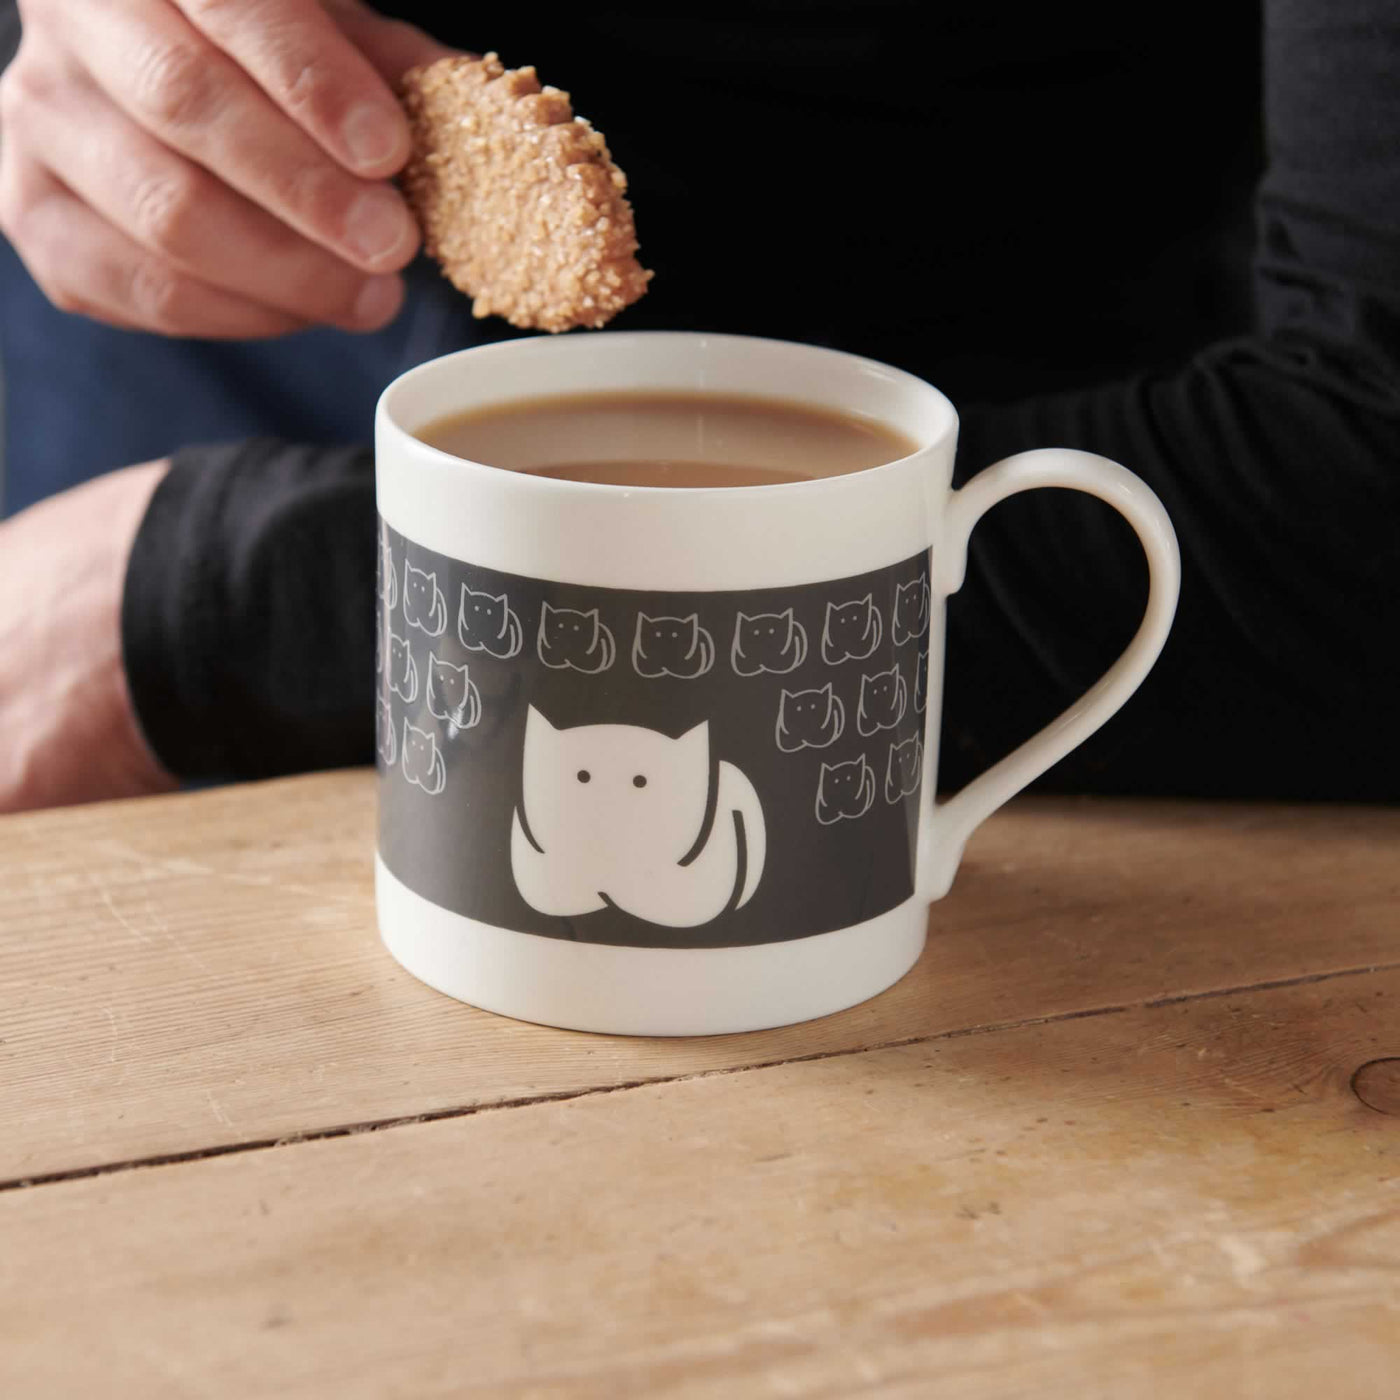 CatLoaf Mug with biscuit